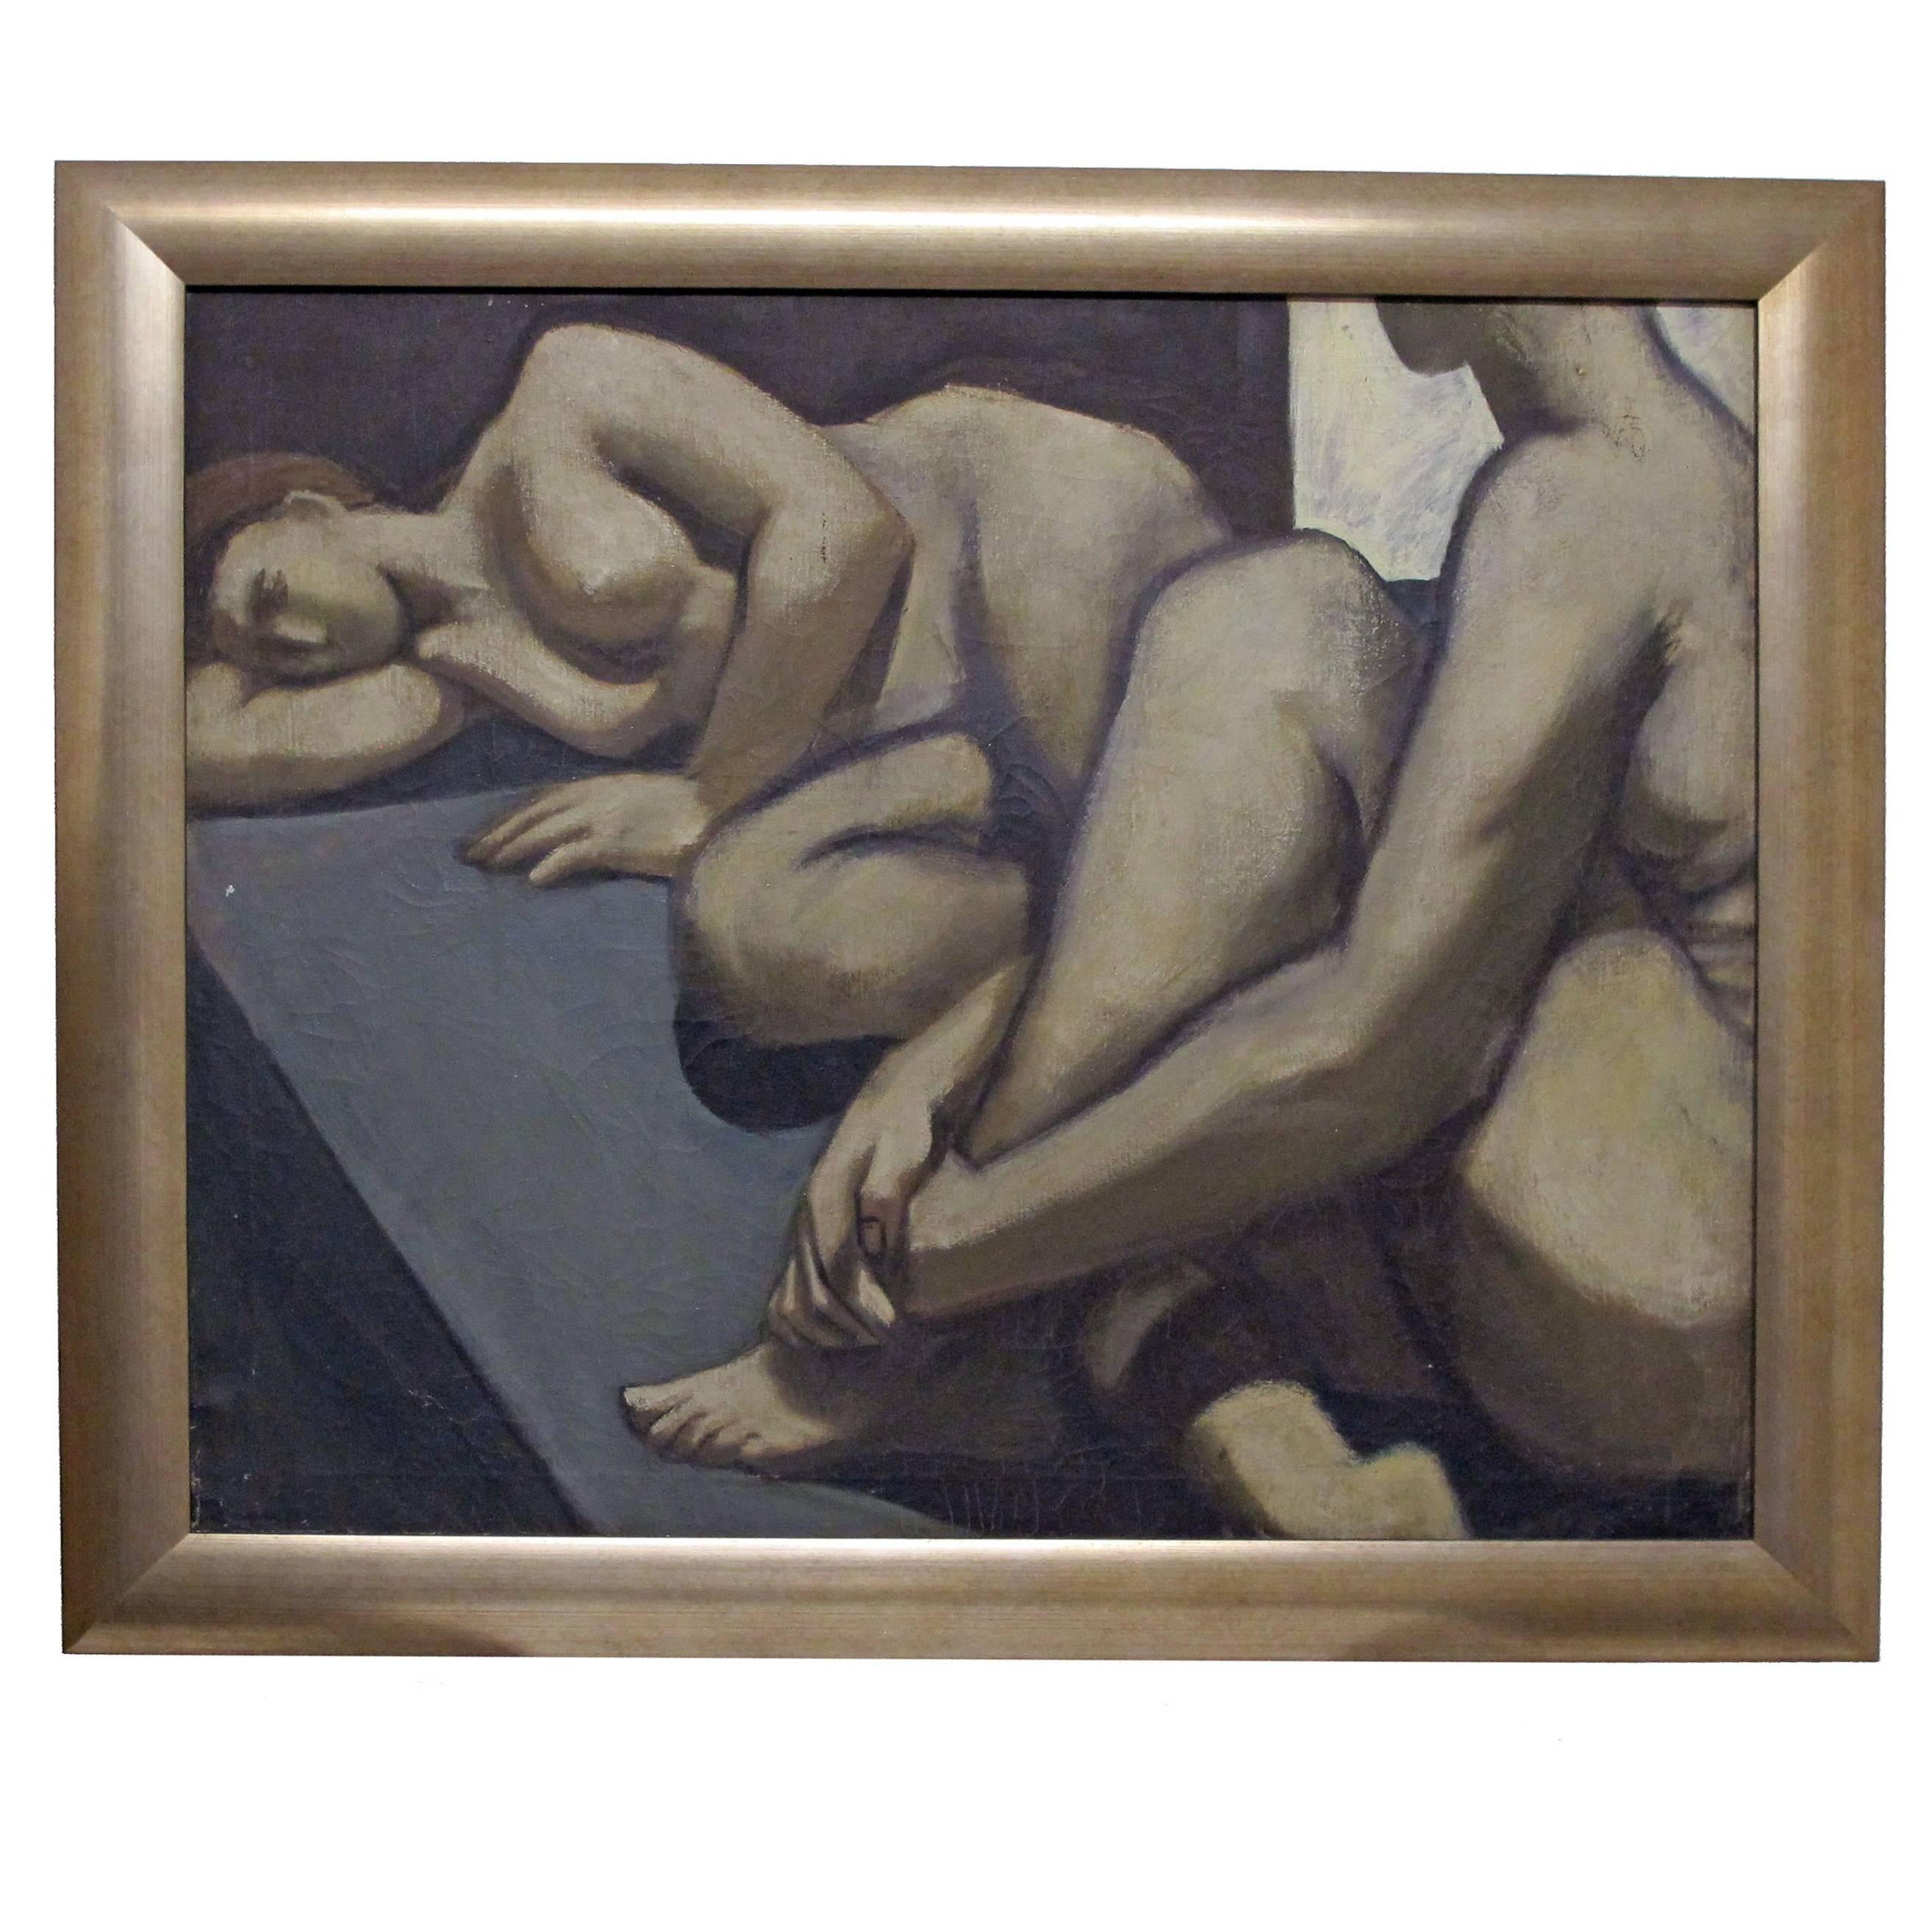 Grande peinture figurative d'un nu figuratif par David Ladin, États-Unis, milieu du XXe siècle